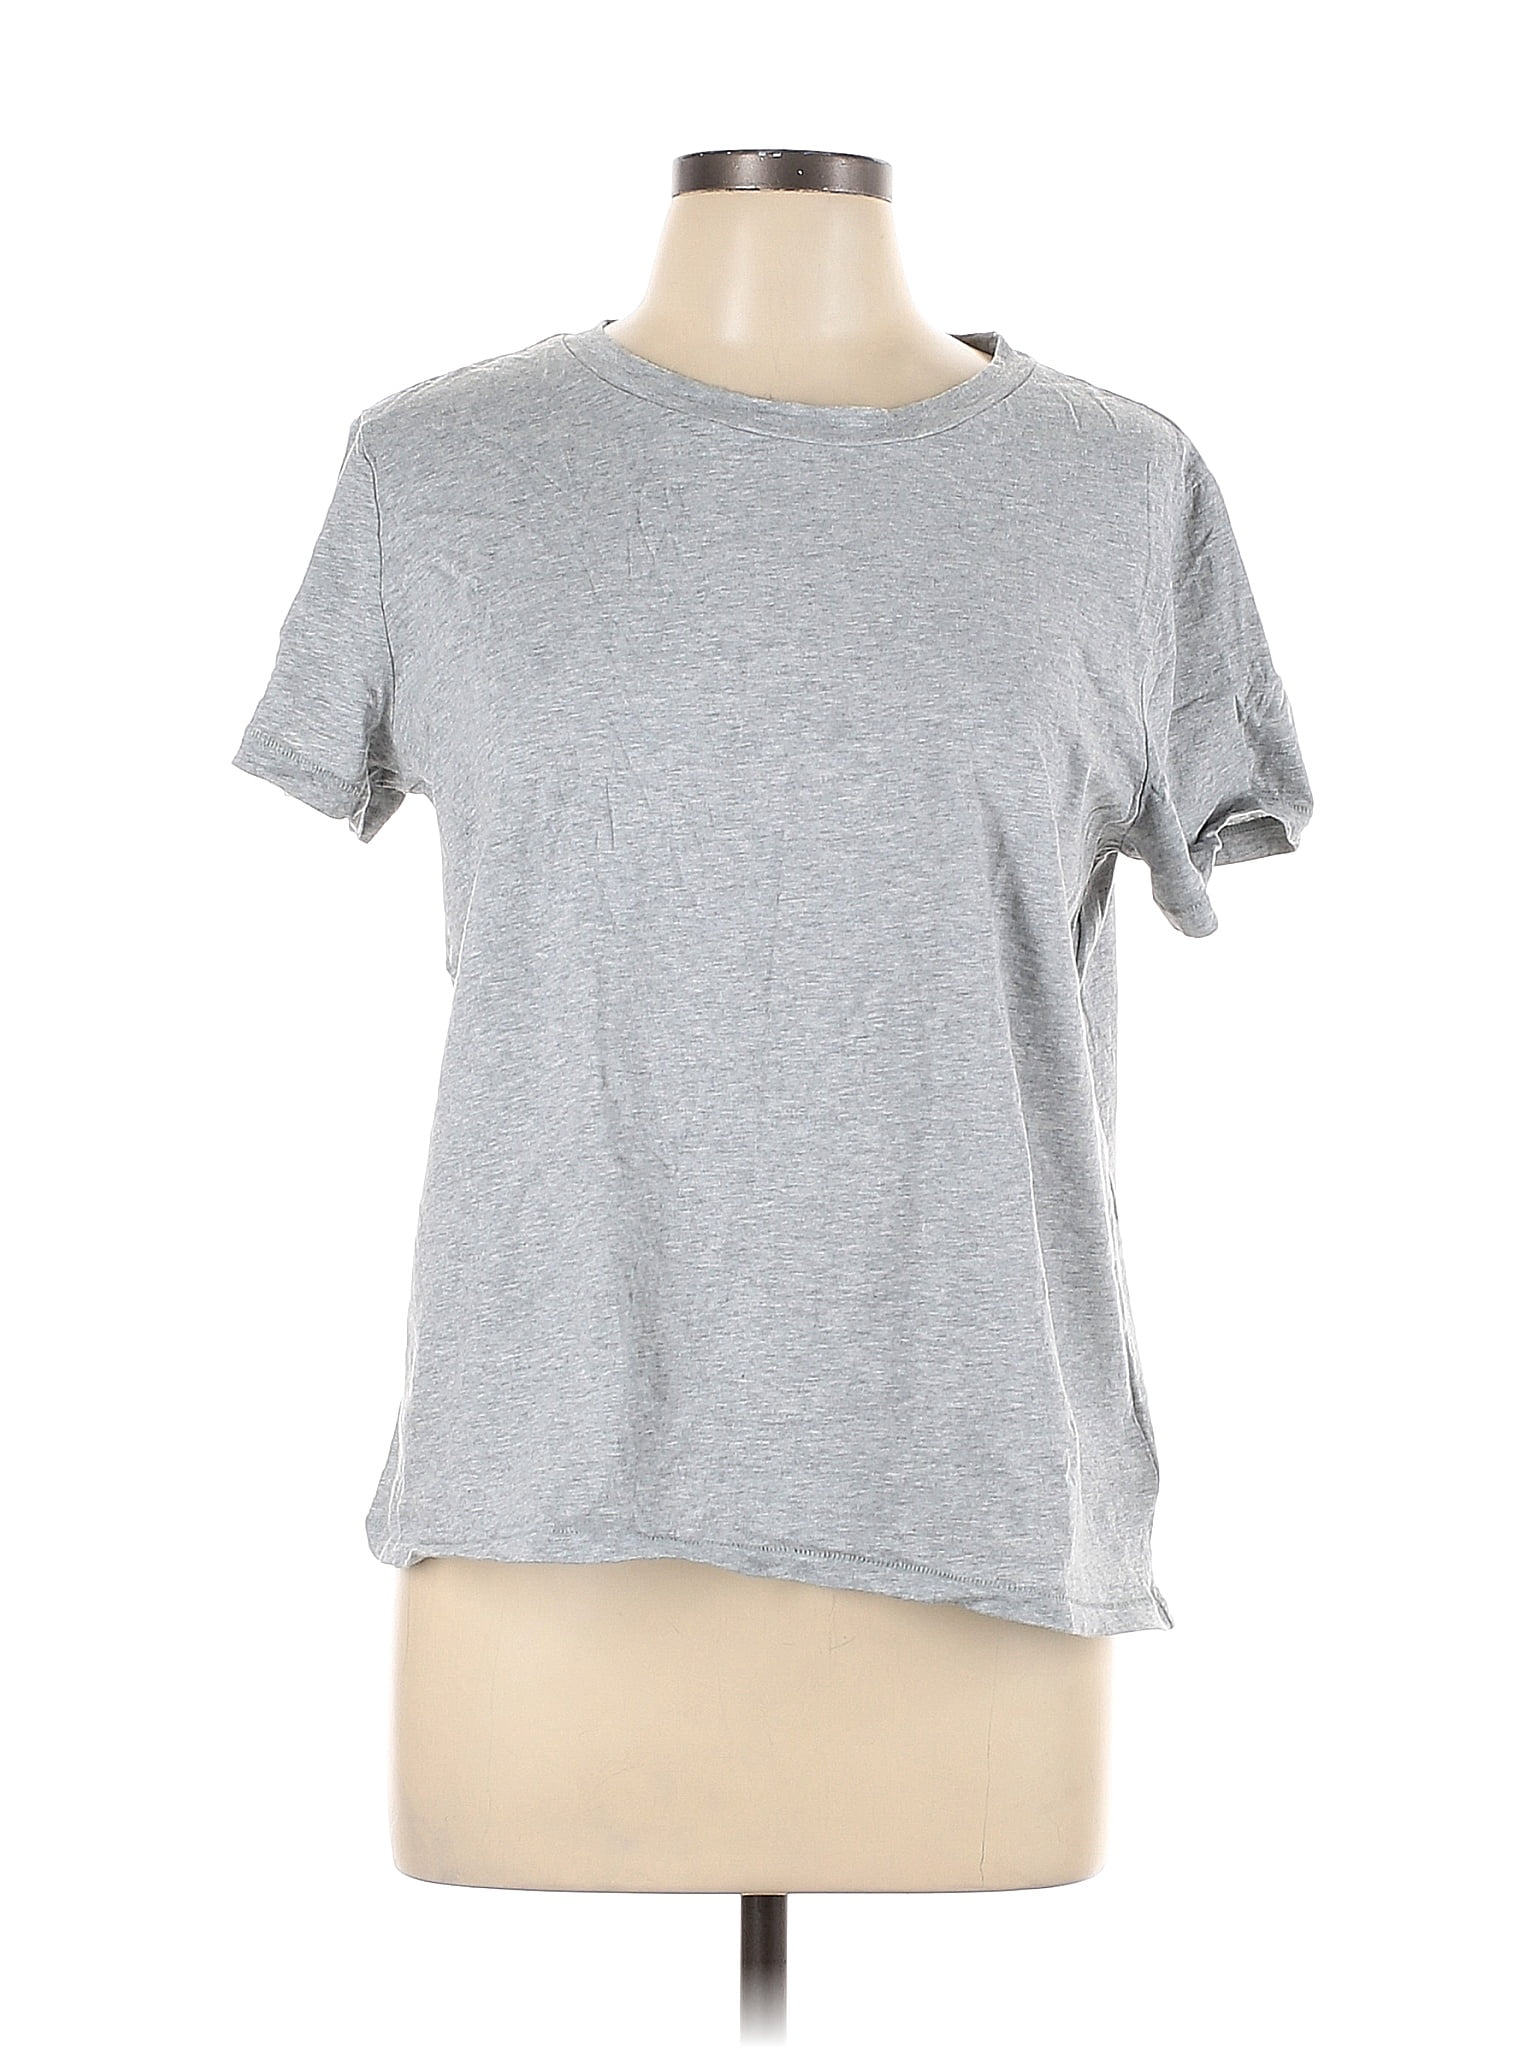 Gap 100% Cotton Gray Short Sleeve T-Shirt Size L - 70% off | thredUP